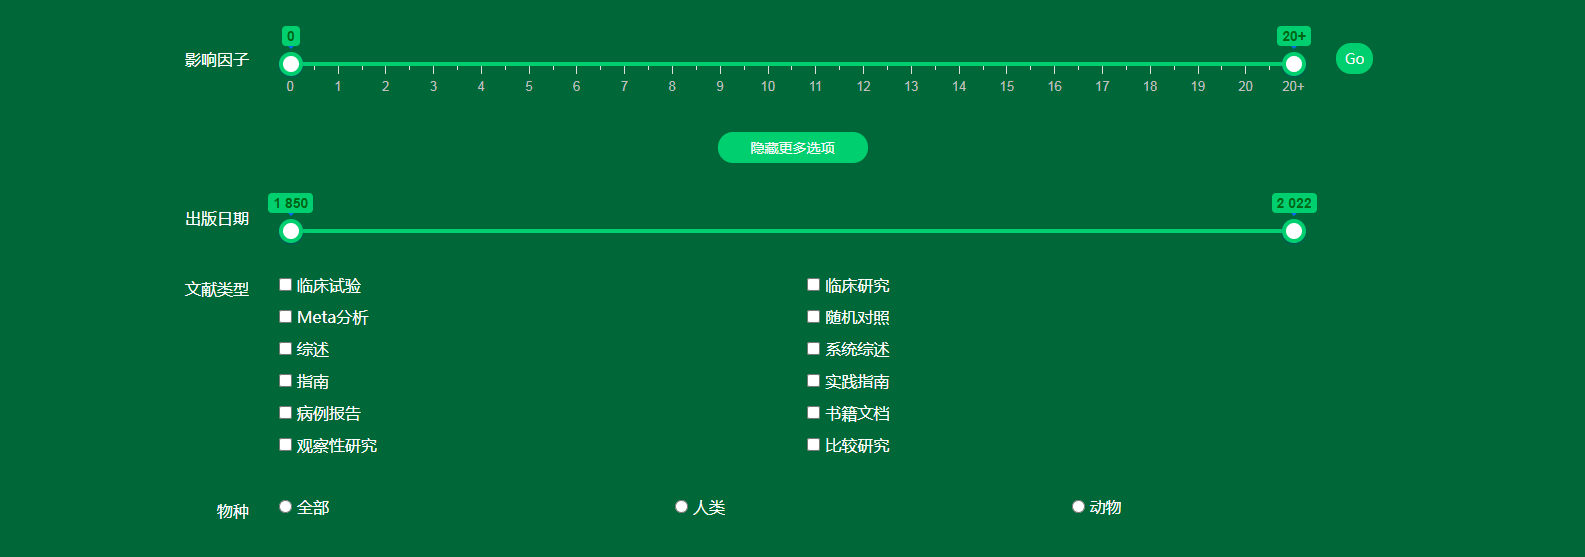 PubMed中文版——支持出版年份、文献类型和物种类别查询